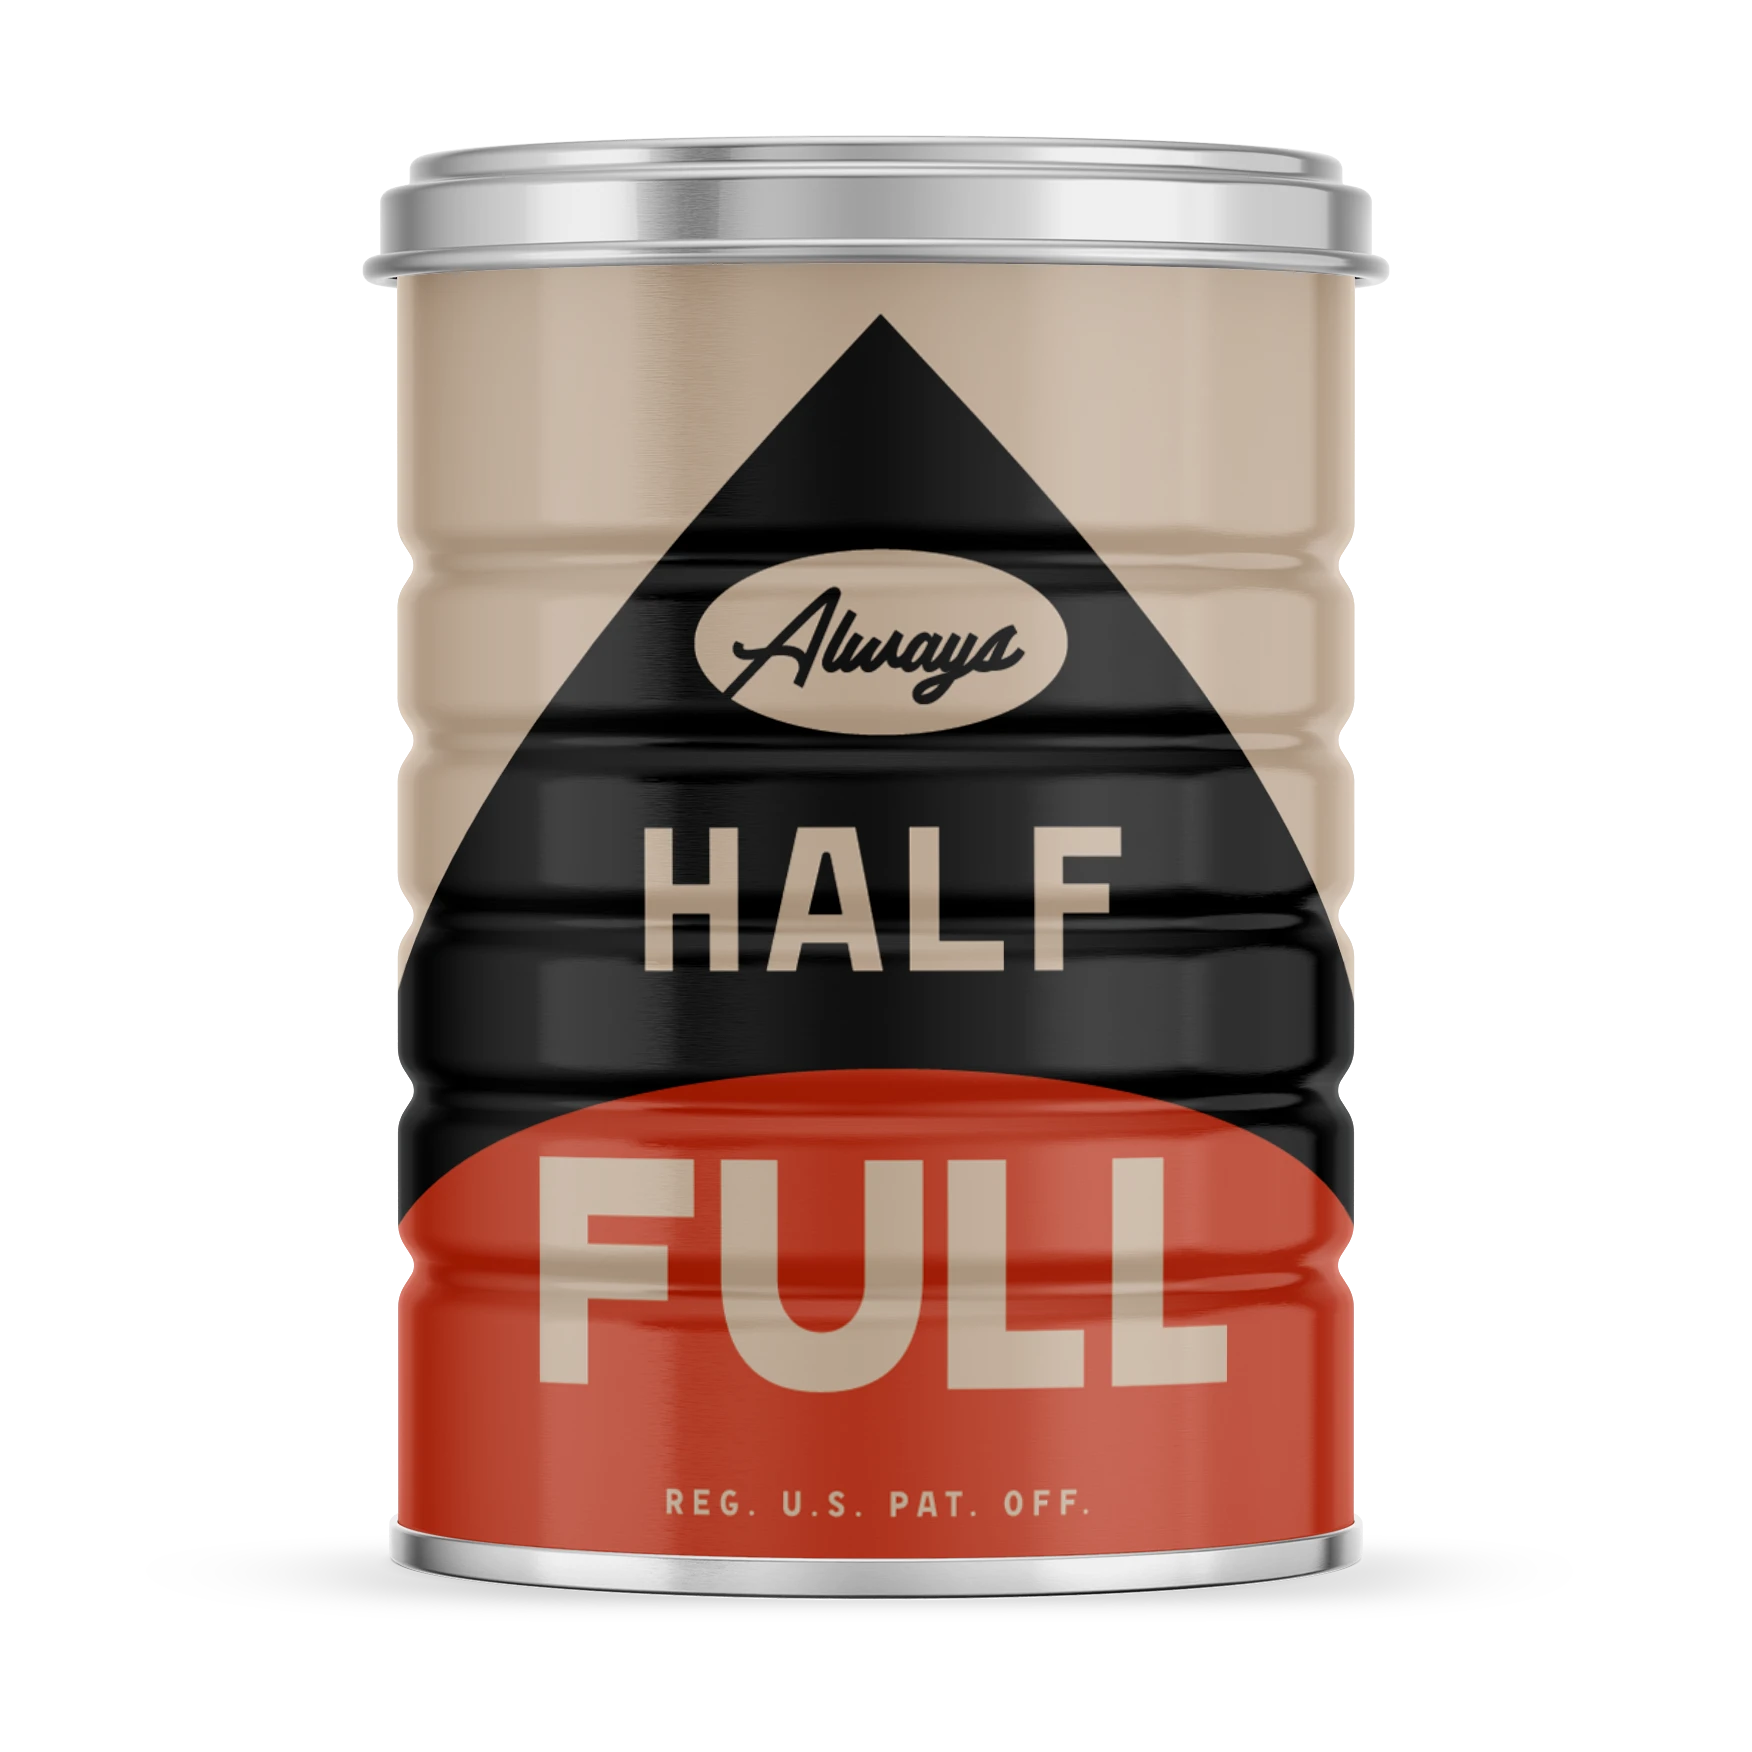 Always Half Full